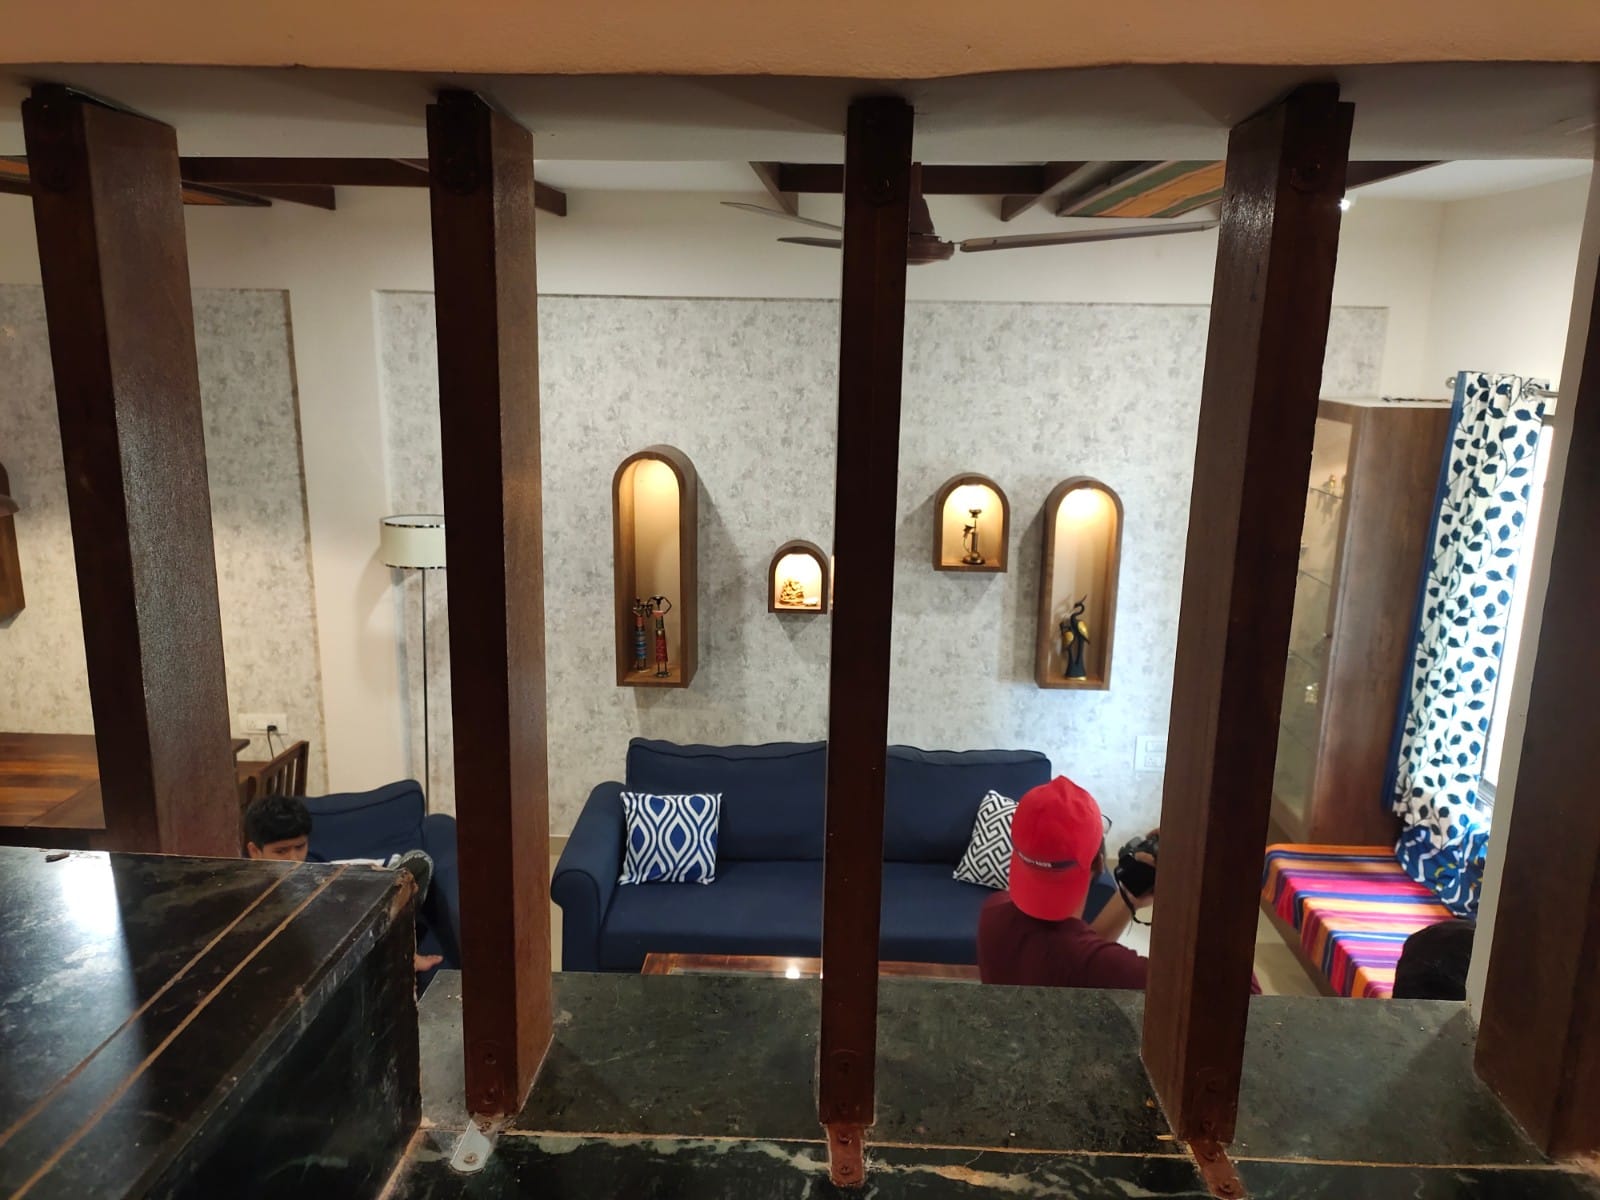 Pune Residence Interiors